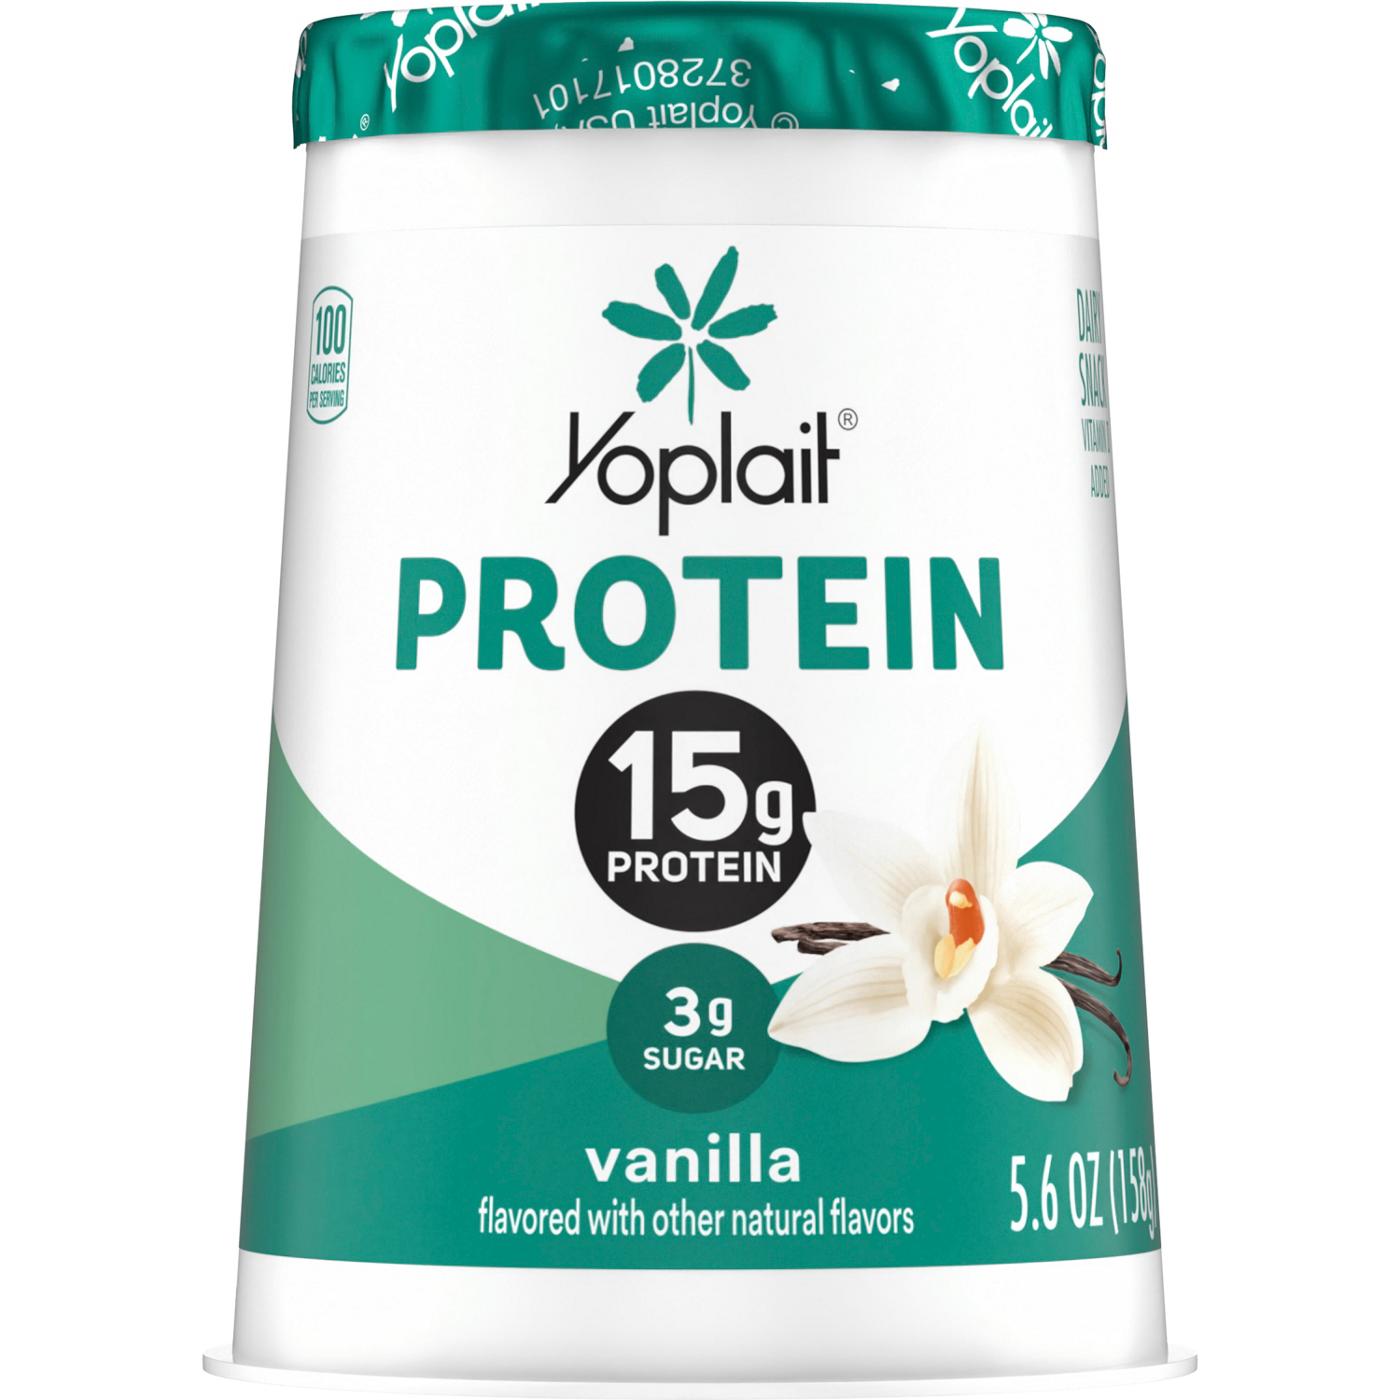 Yoplait 15g Protein Vanilla Yogurt; image 1 of 4